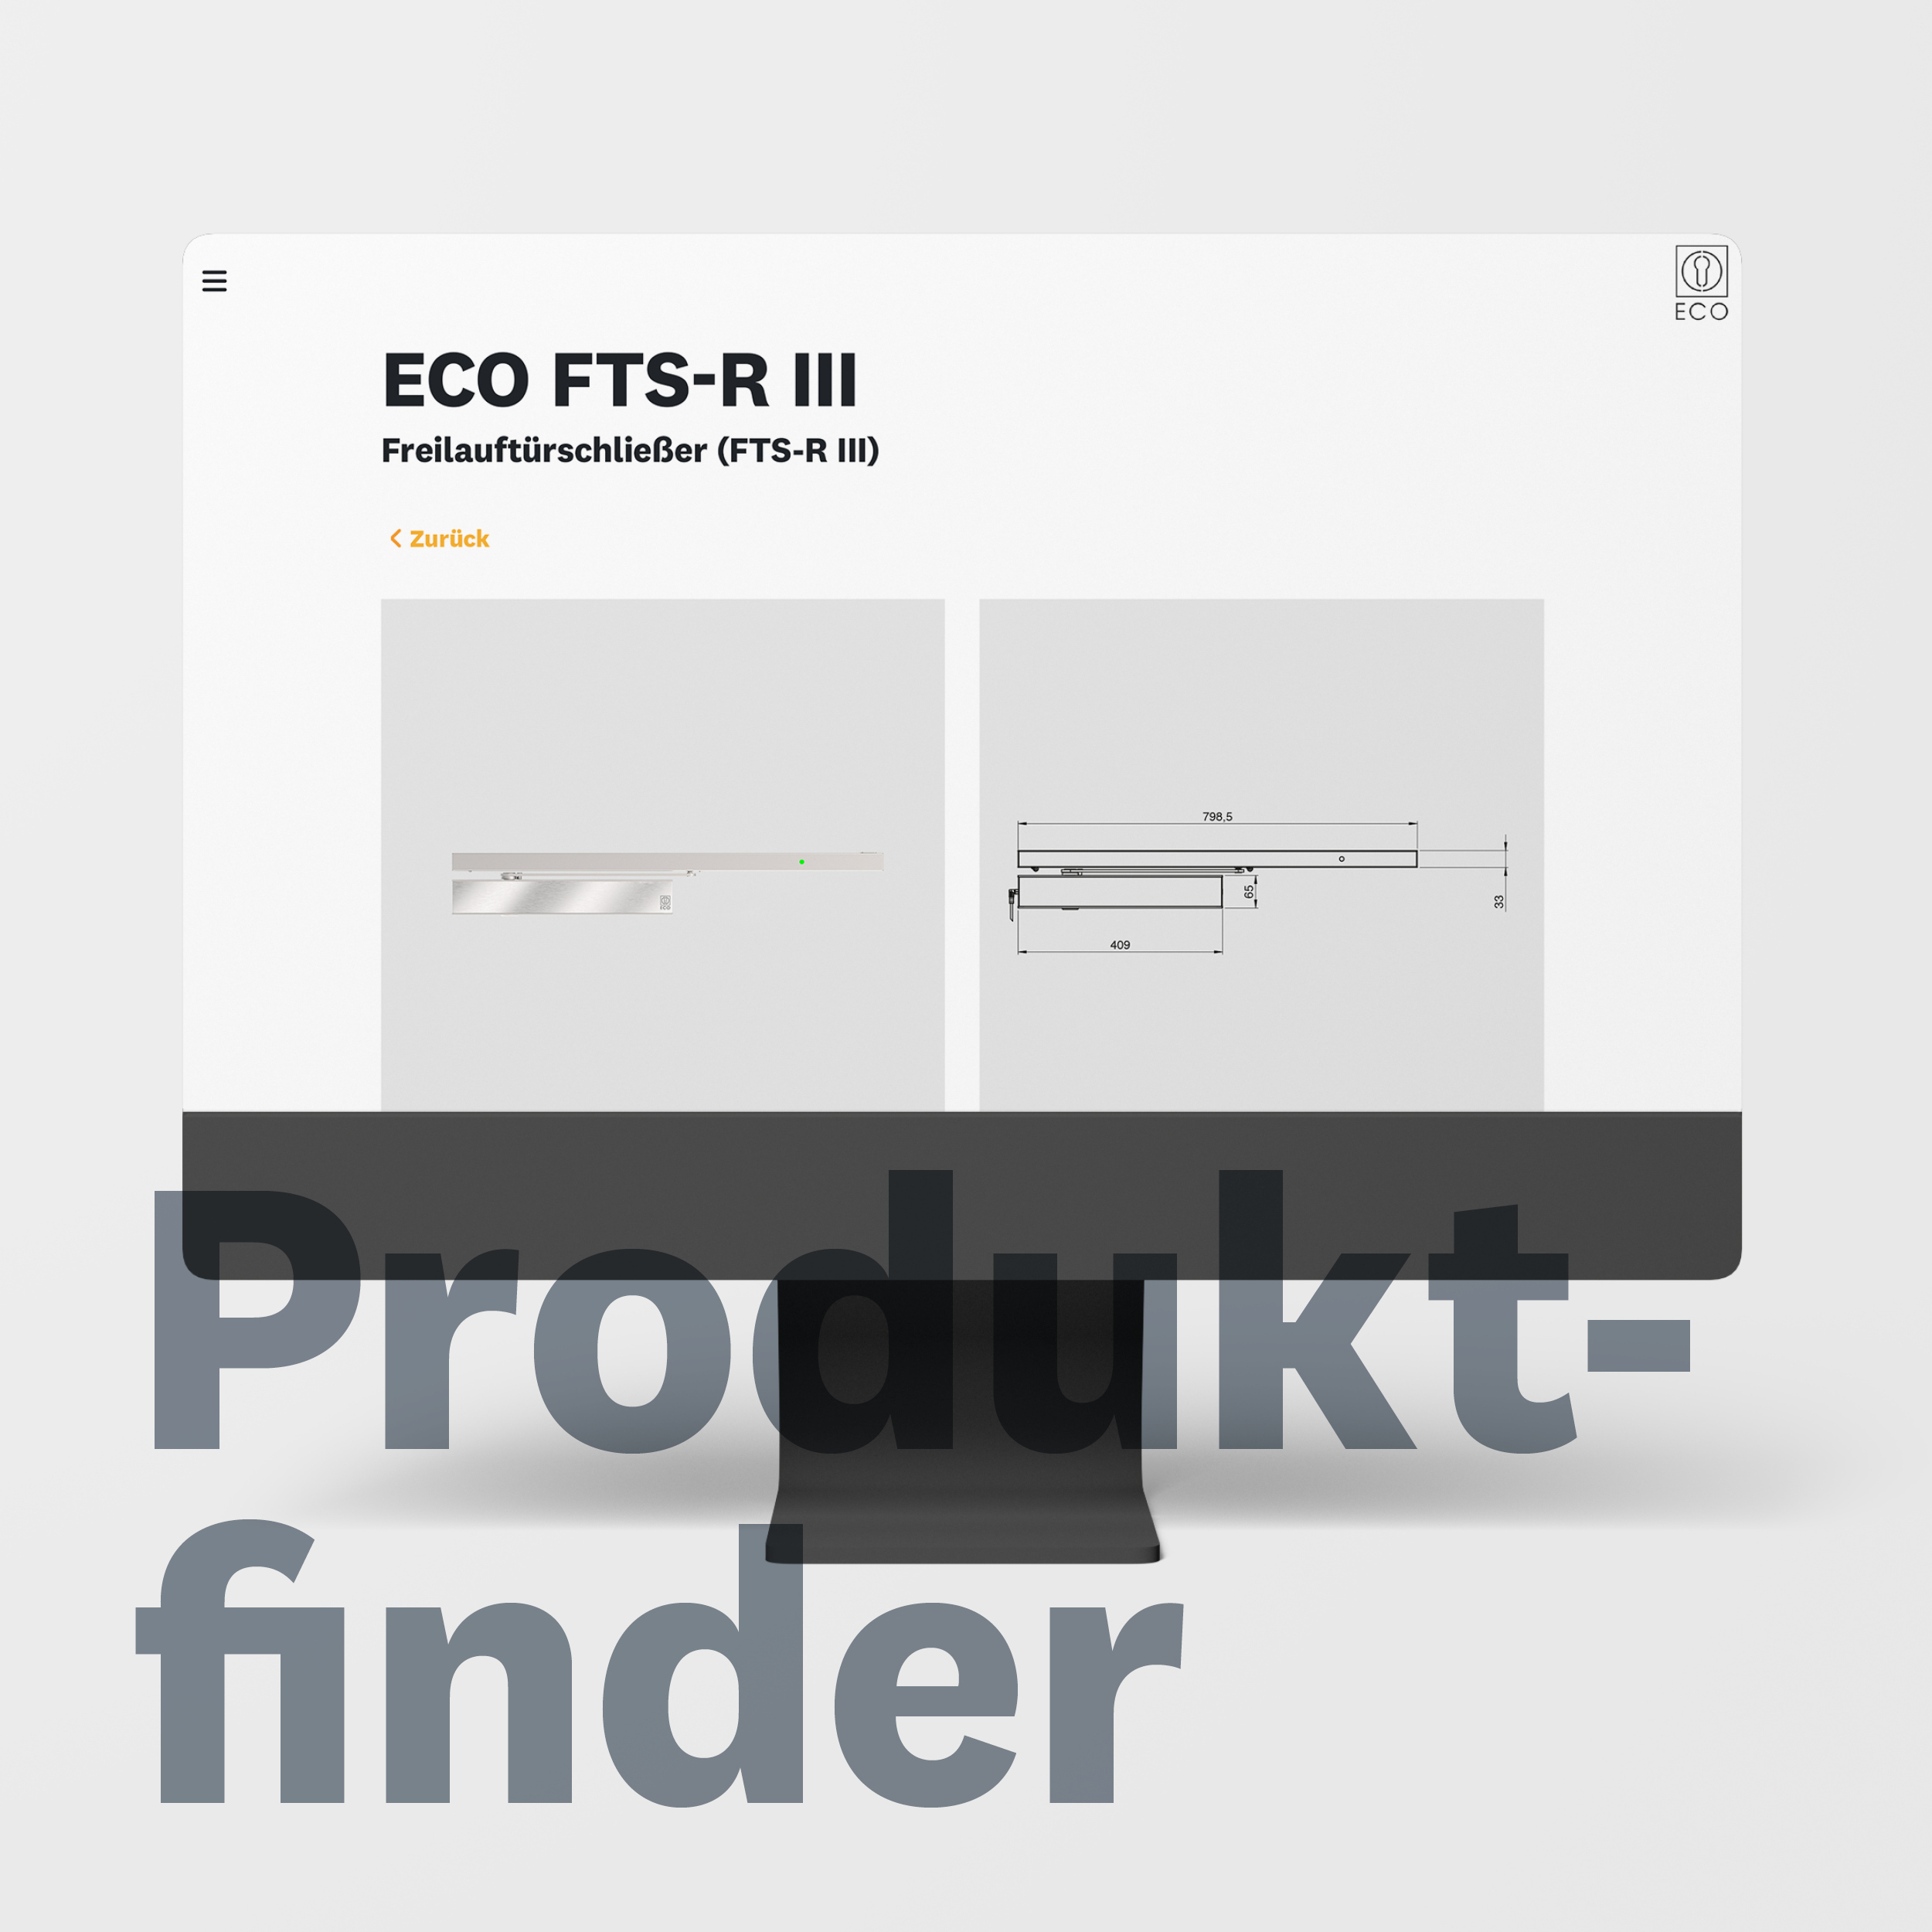 eco-schulte-teaser-produktfinder-fts-r-iii-de